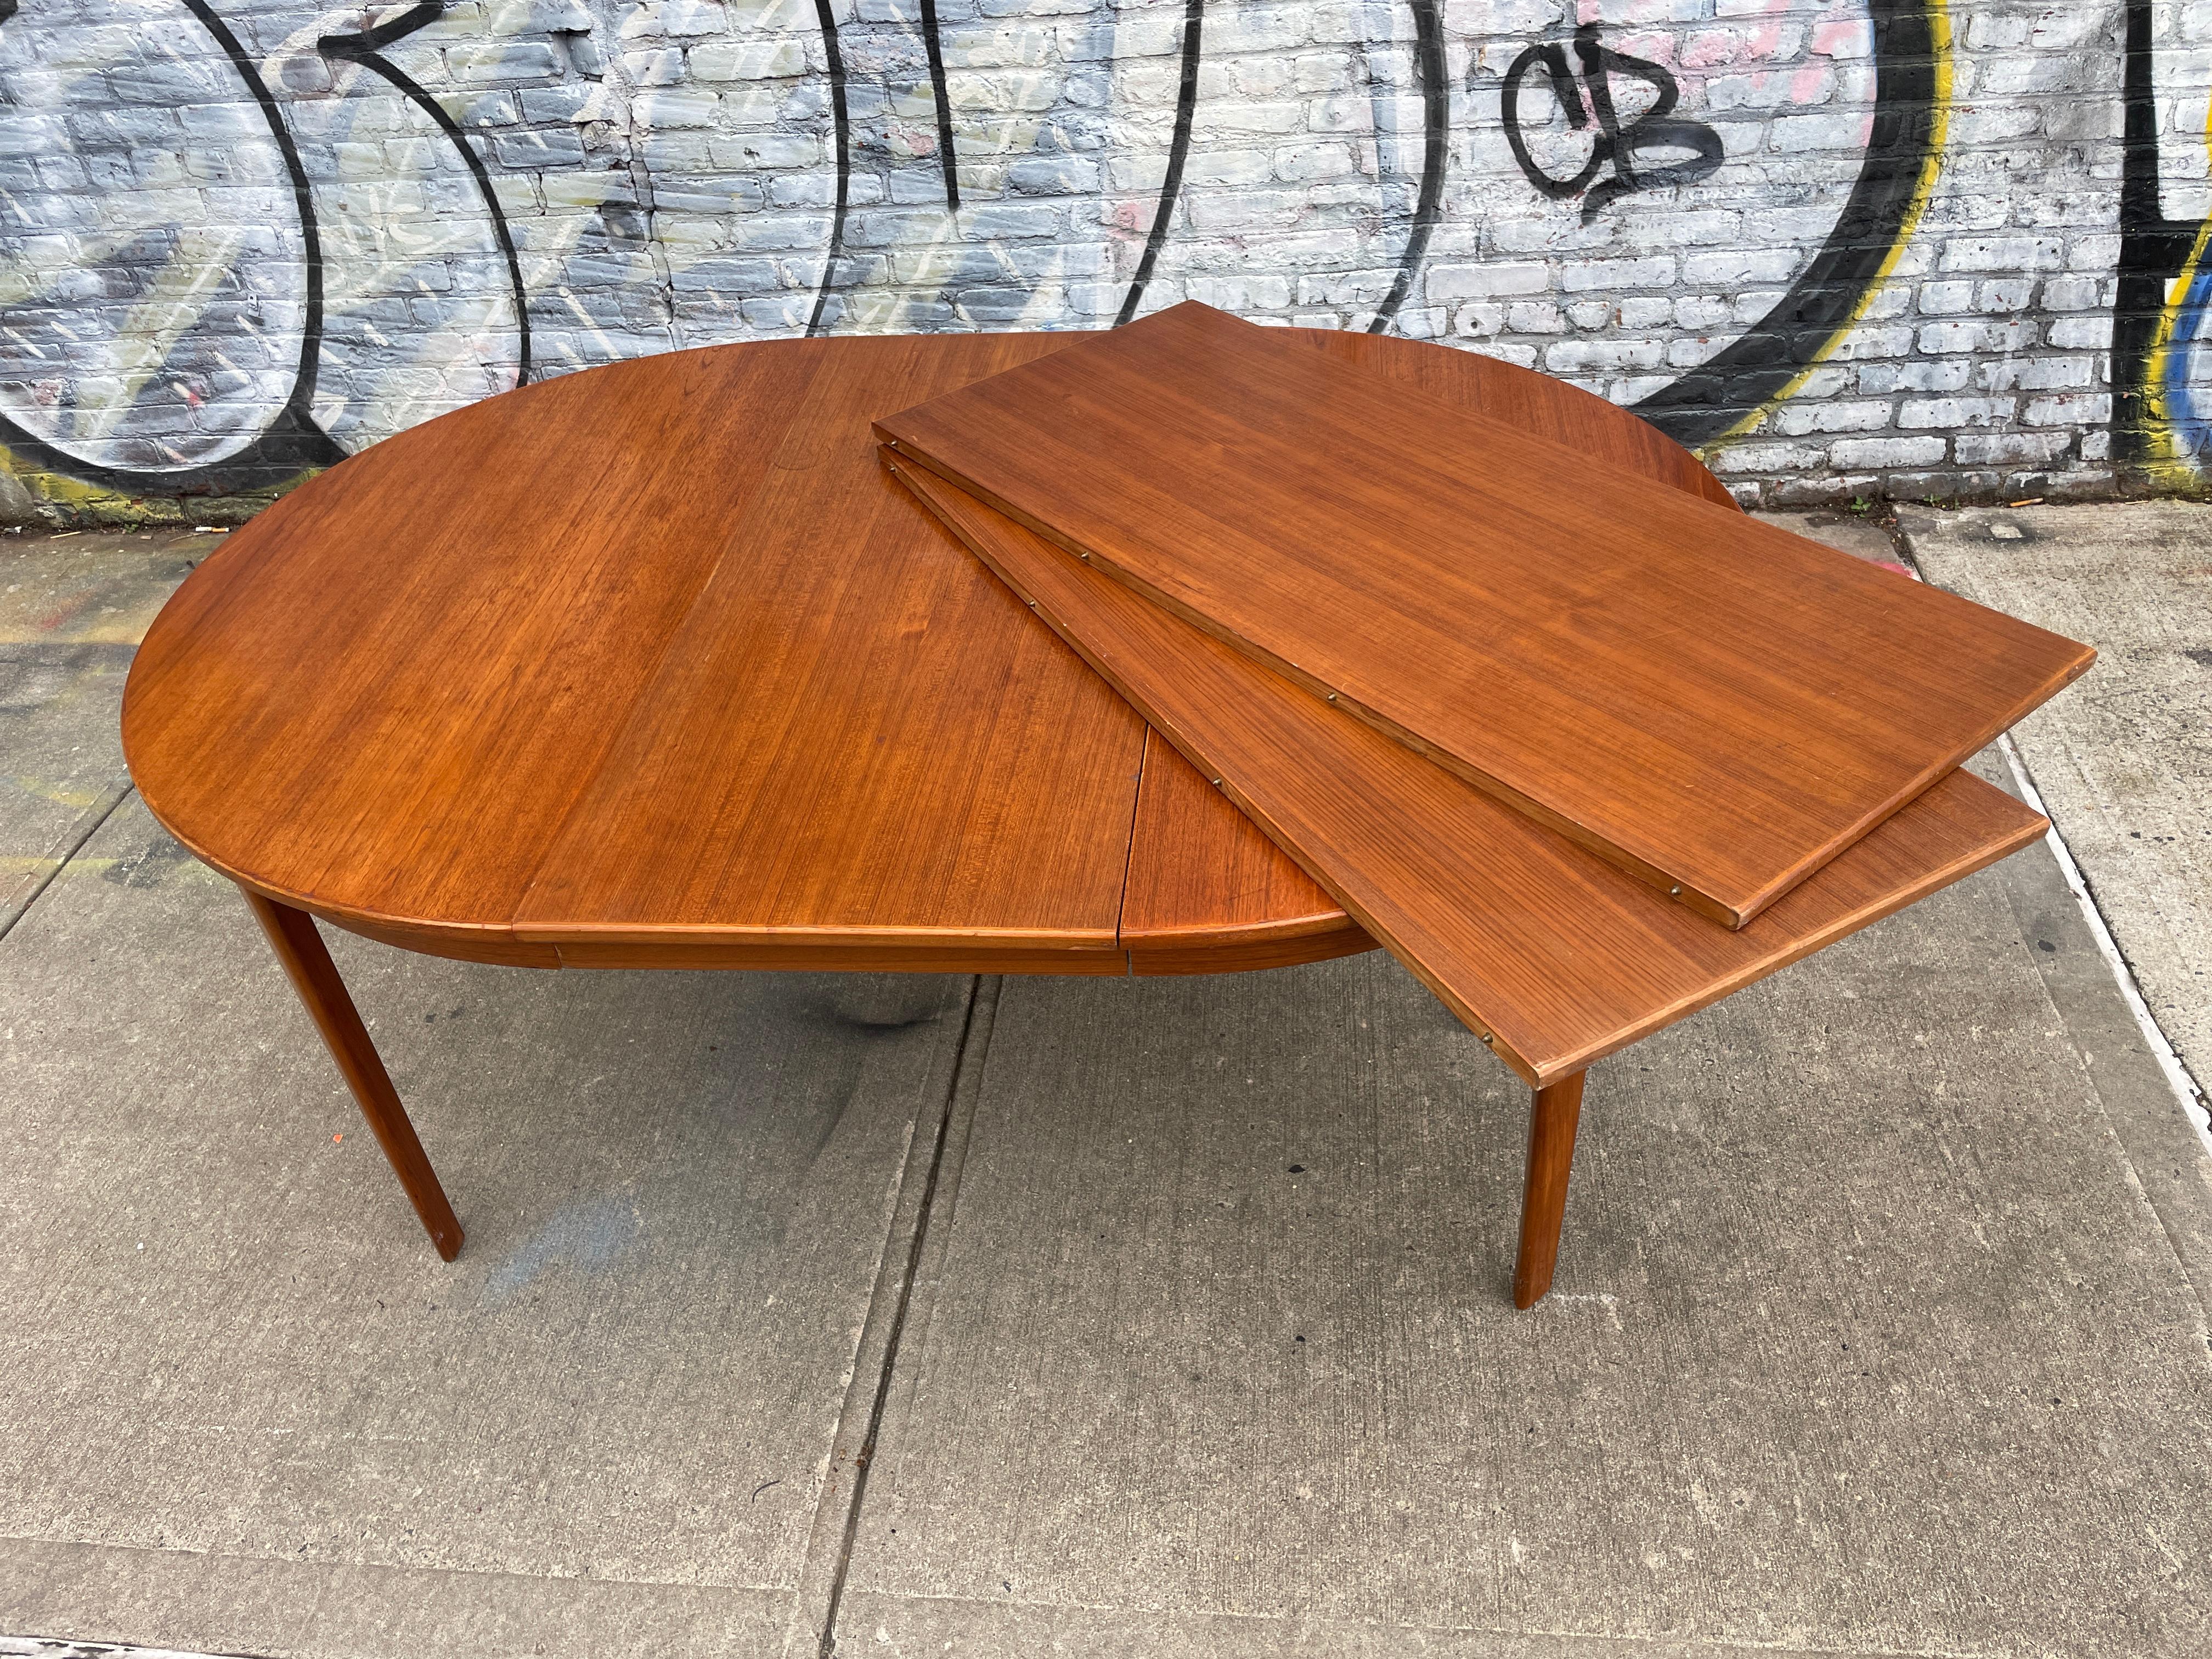 Woodwork Midcentury Round Light Teak Danish Modern Extension Dining Table 3 Leaves For Sale